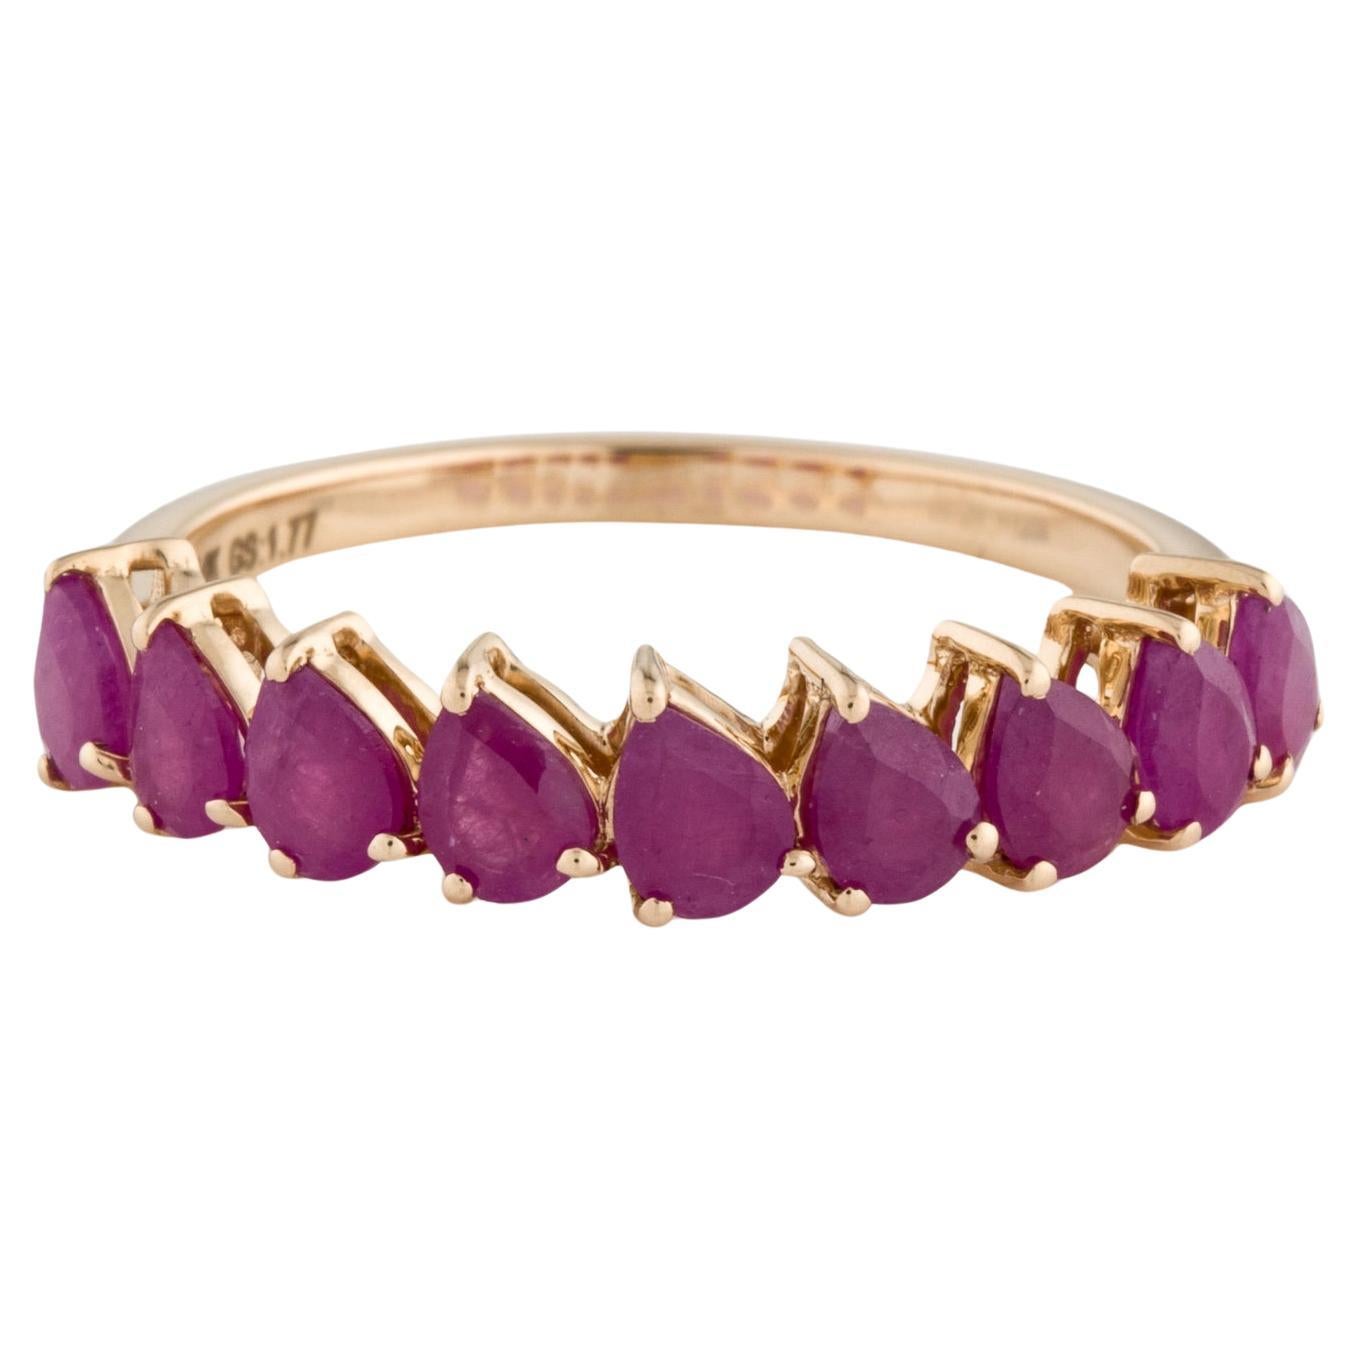 Stunning 14K Ruby Band Ring with 1.77ctw Gemstones - Size 8  Elegant & Vintage For Sale